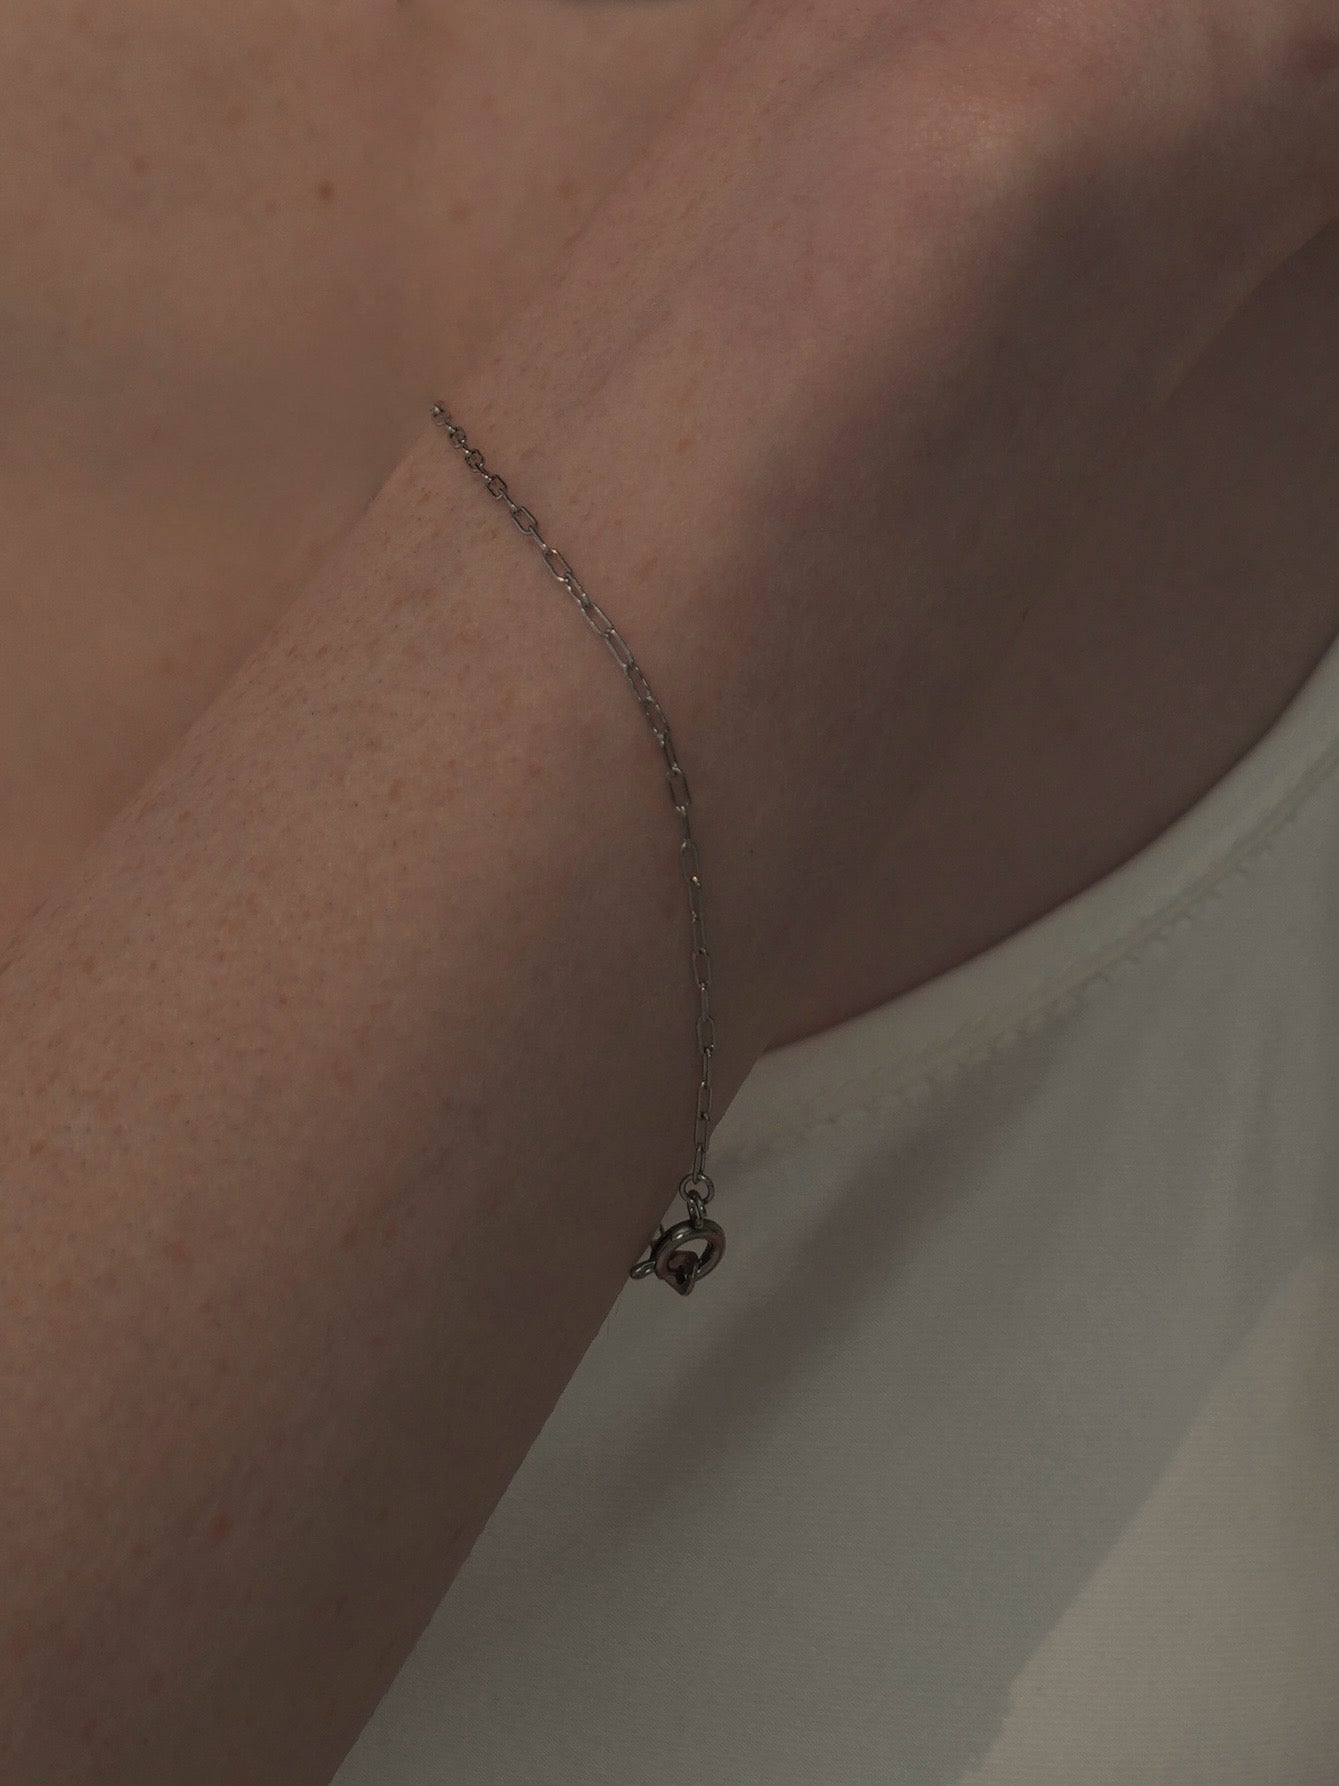 pas chain bracelet / (金属アレルギー対応)